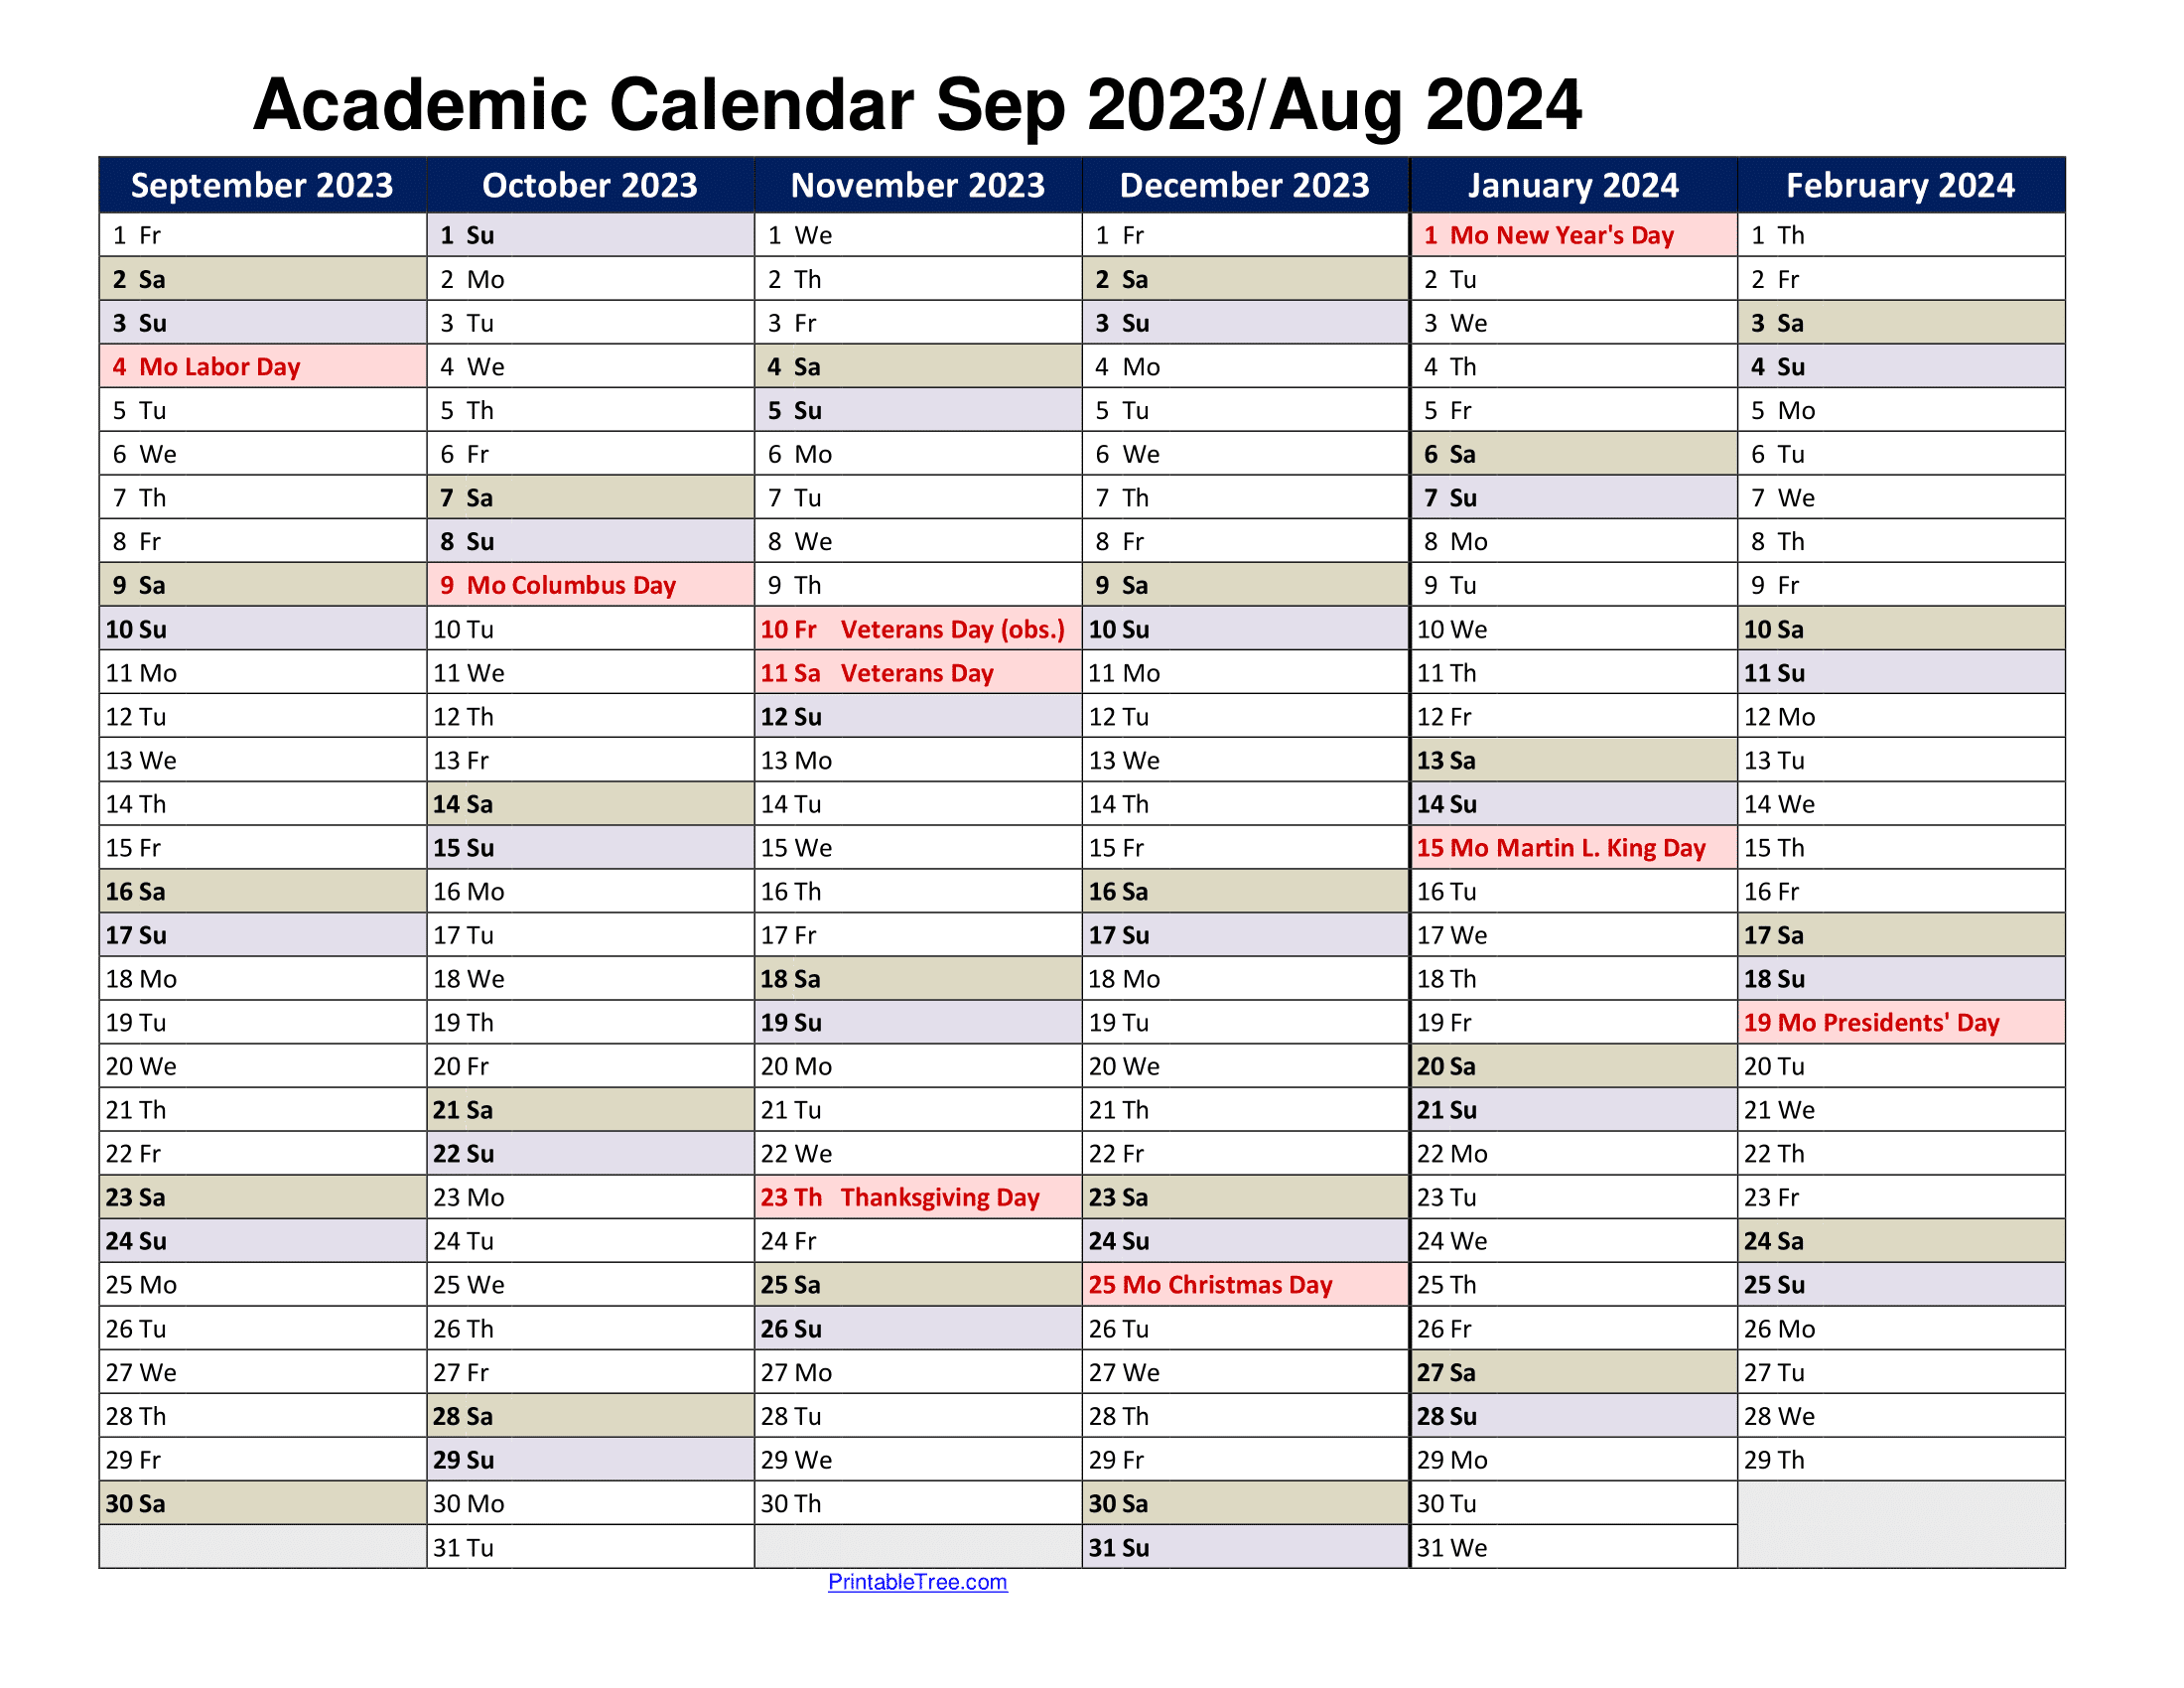 emory-academic-calendar-2023-24-printable-word-searches